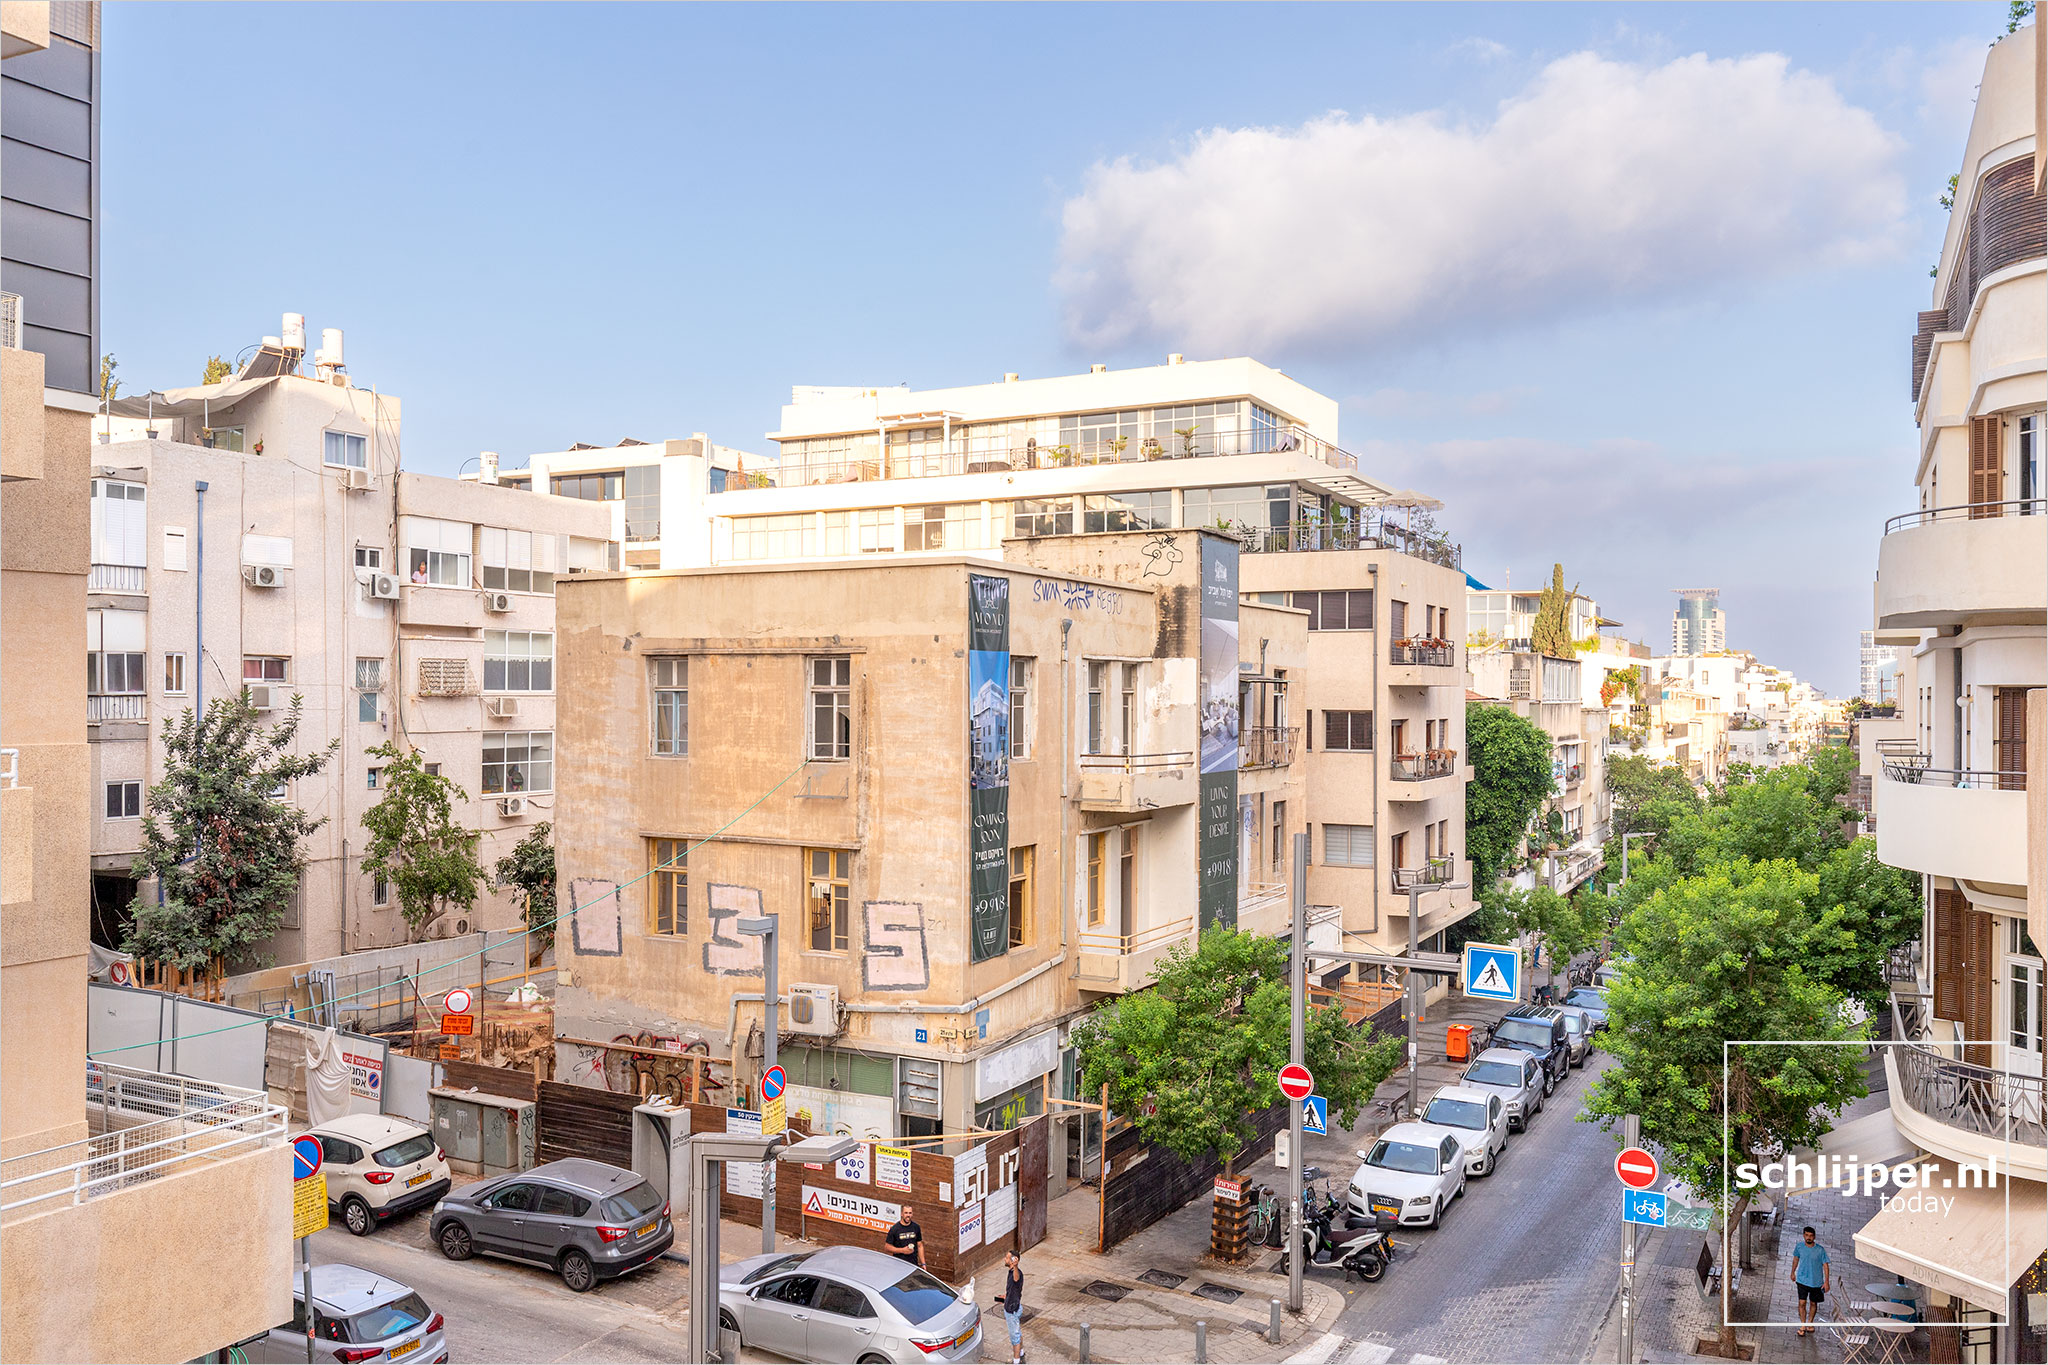 Israel, Tel Aviv, 3 augustus 2022